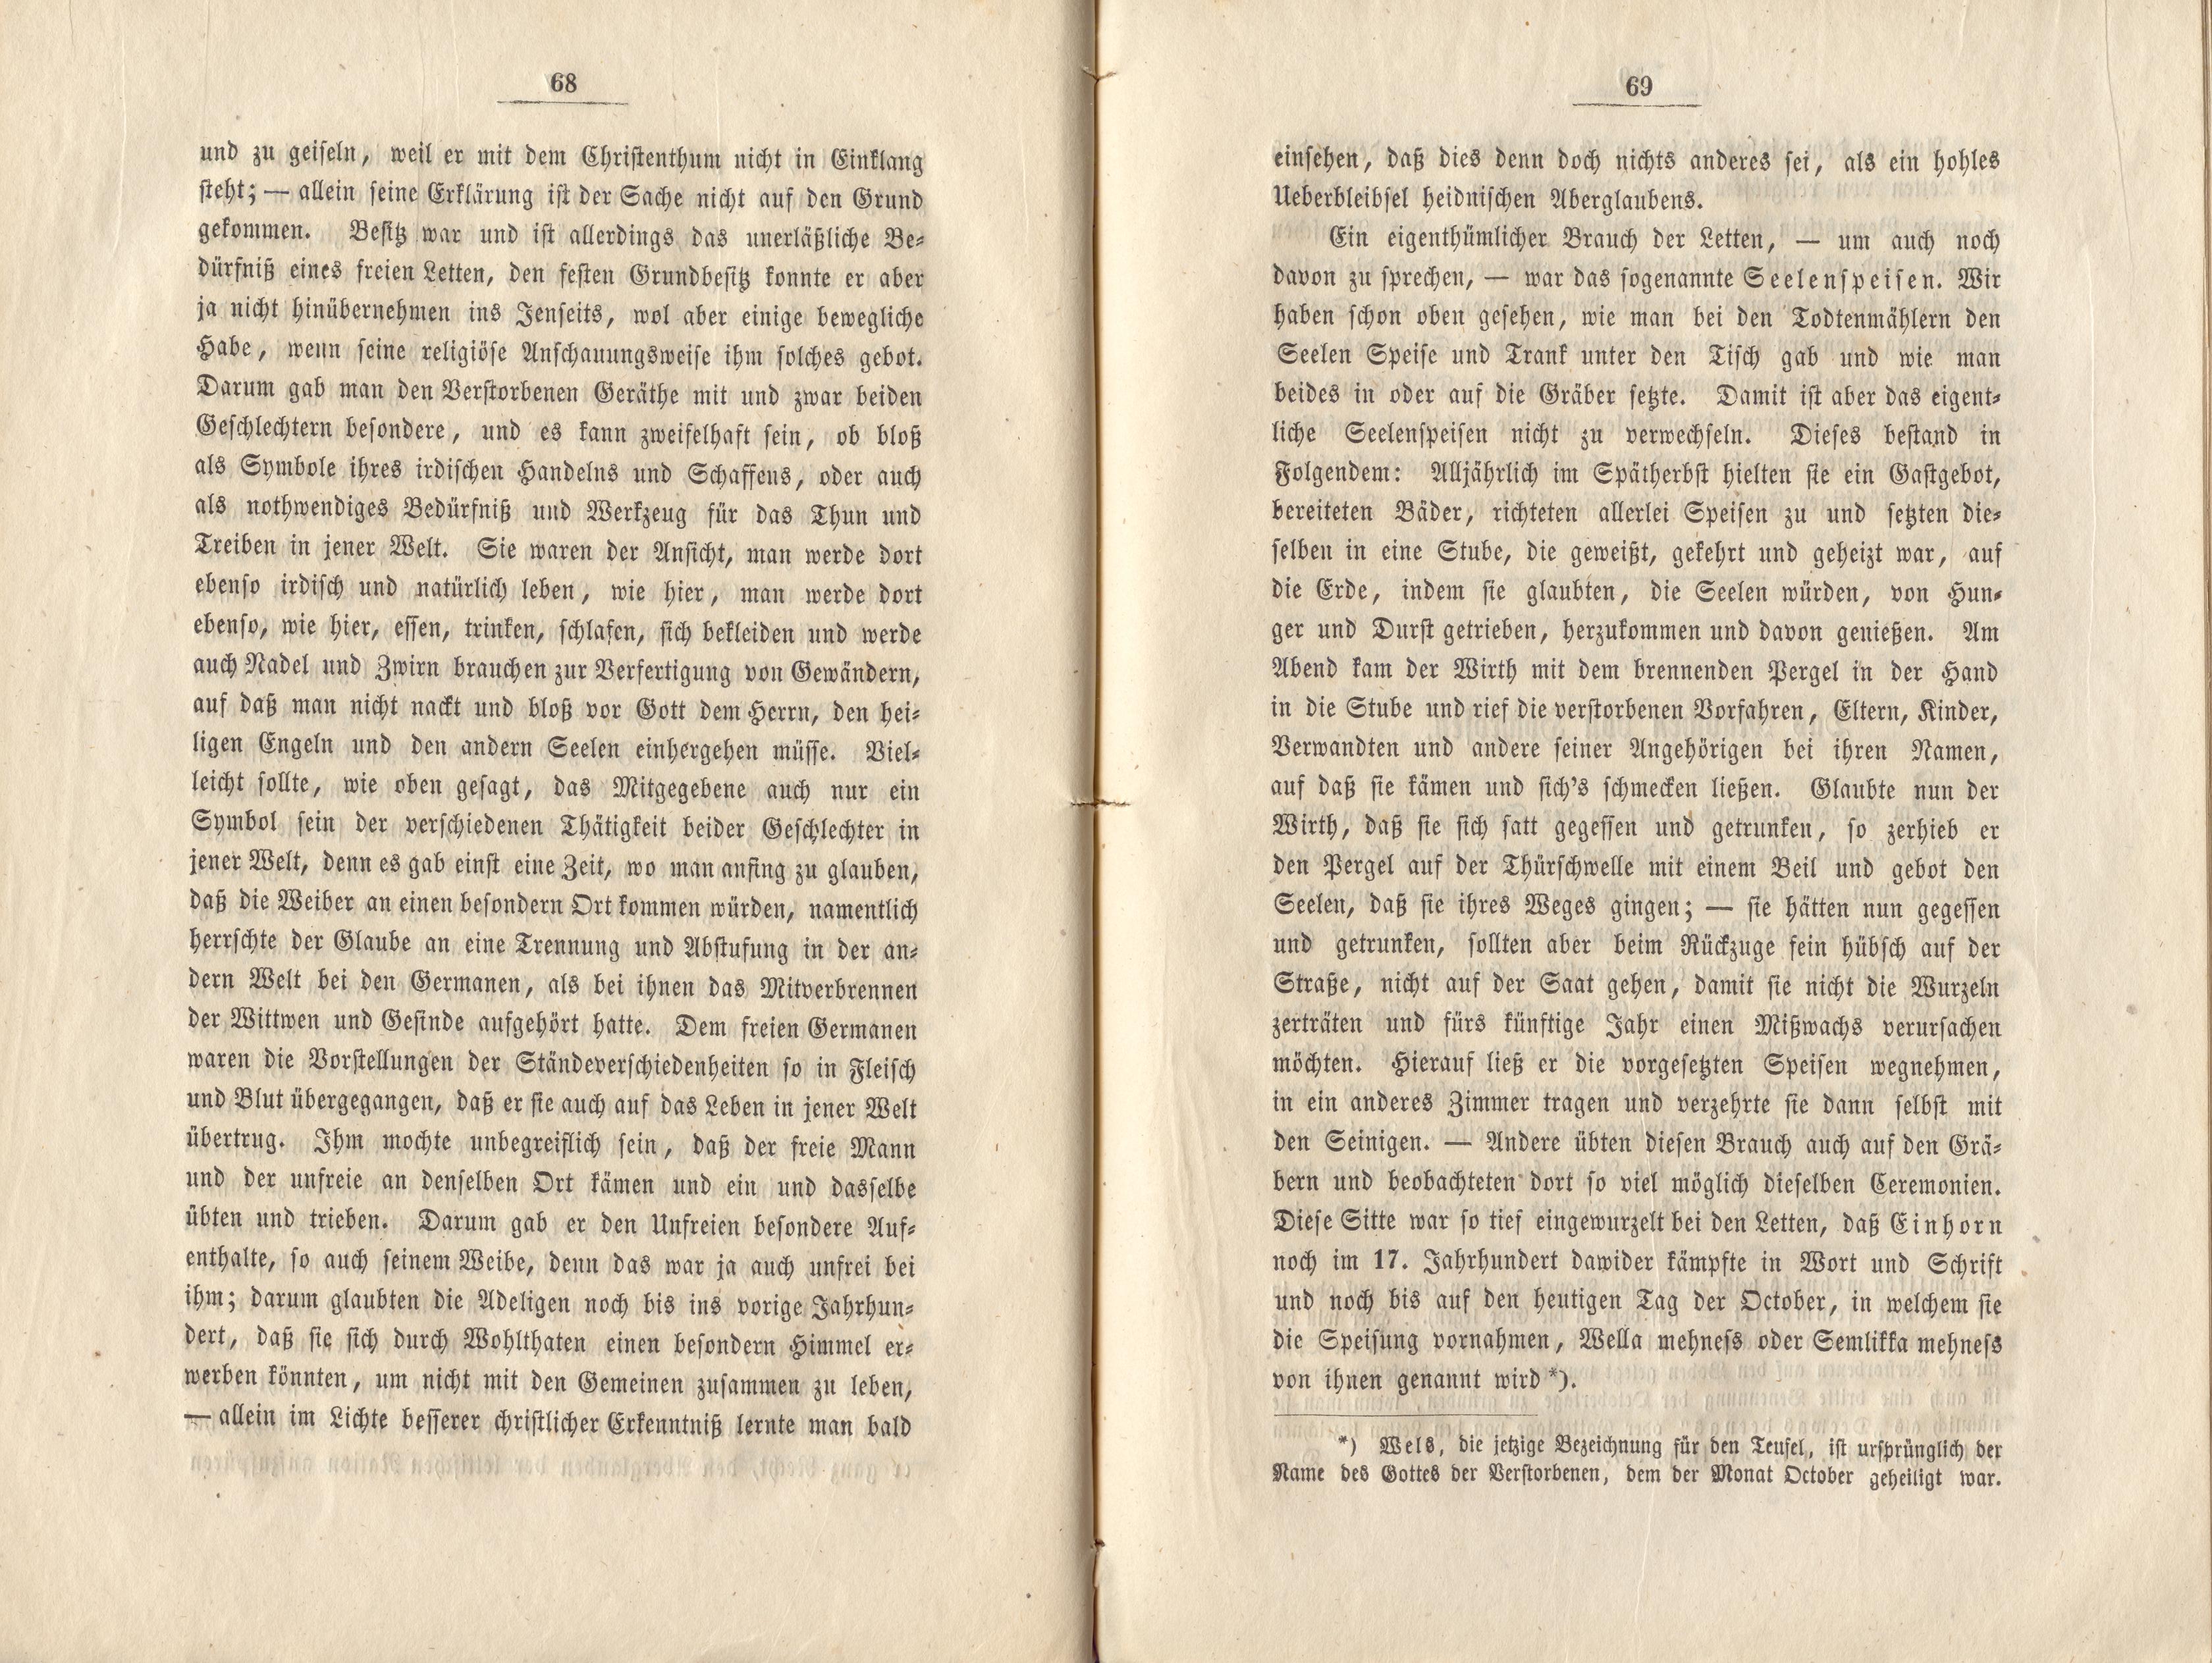 Felliner Blätter (1859) | 35. (68-69) Основной текст